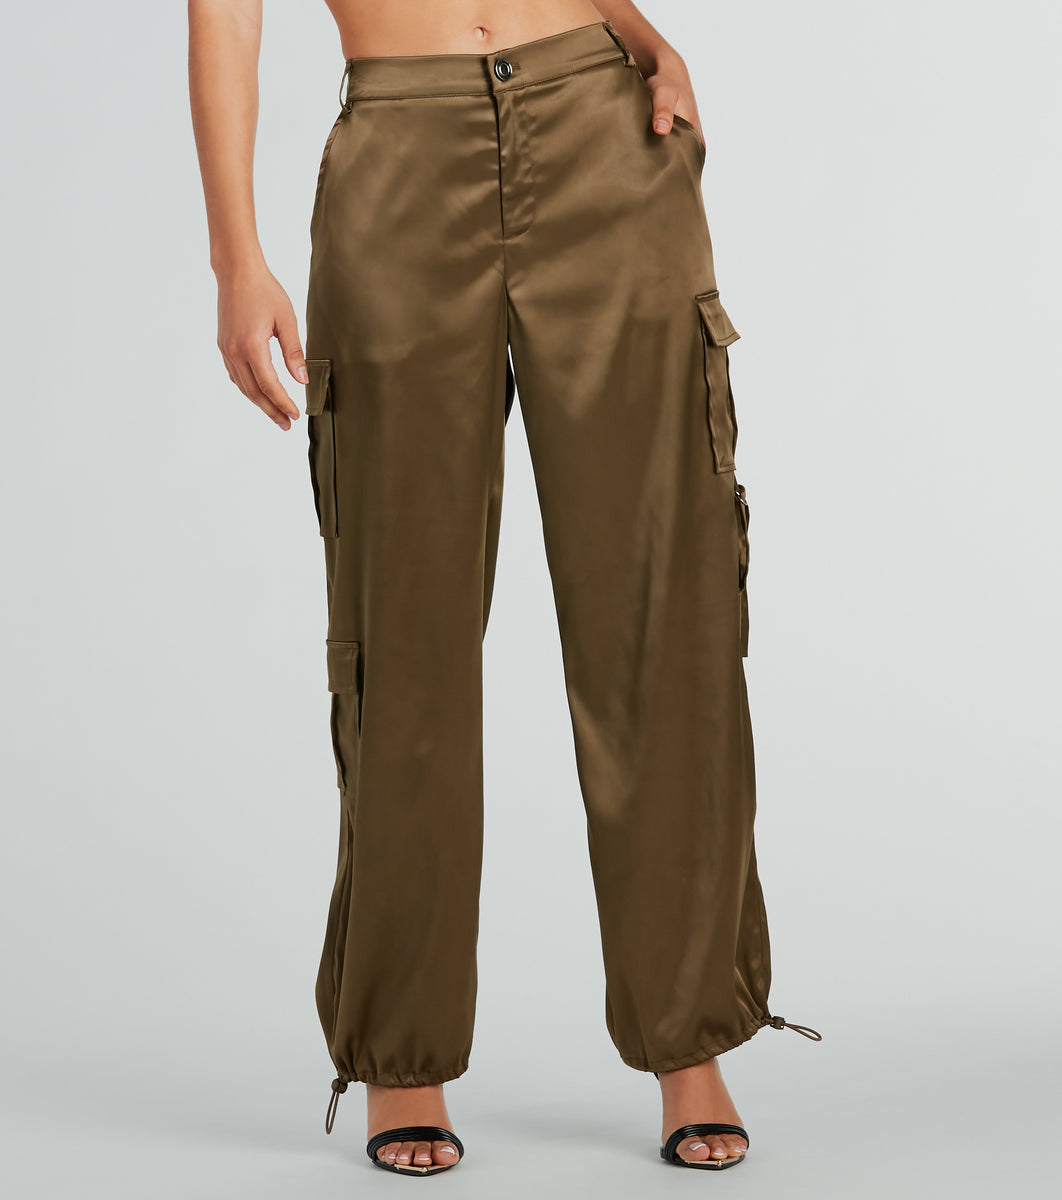 hollister brown cargo pants, ultra high-rise dad - Depop